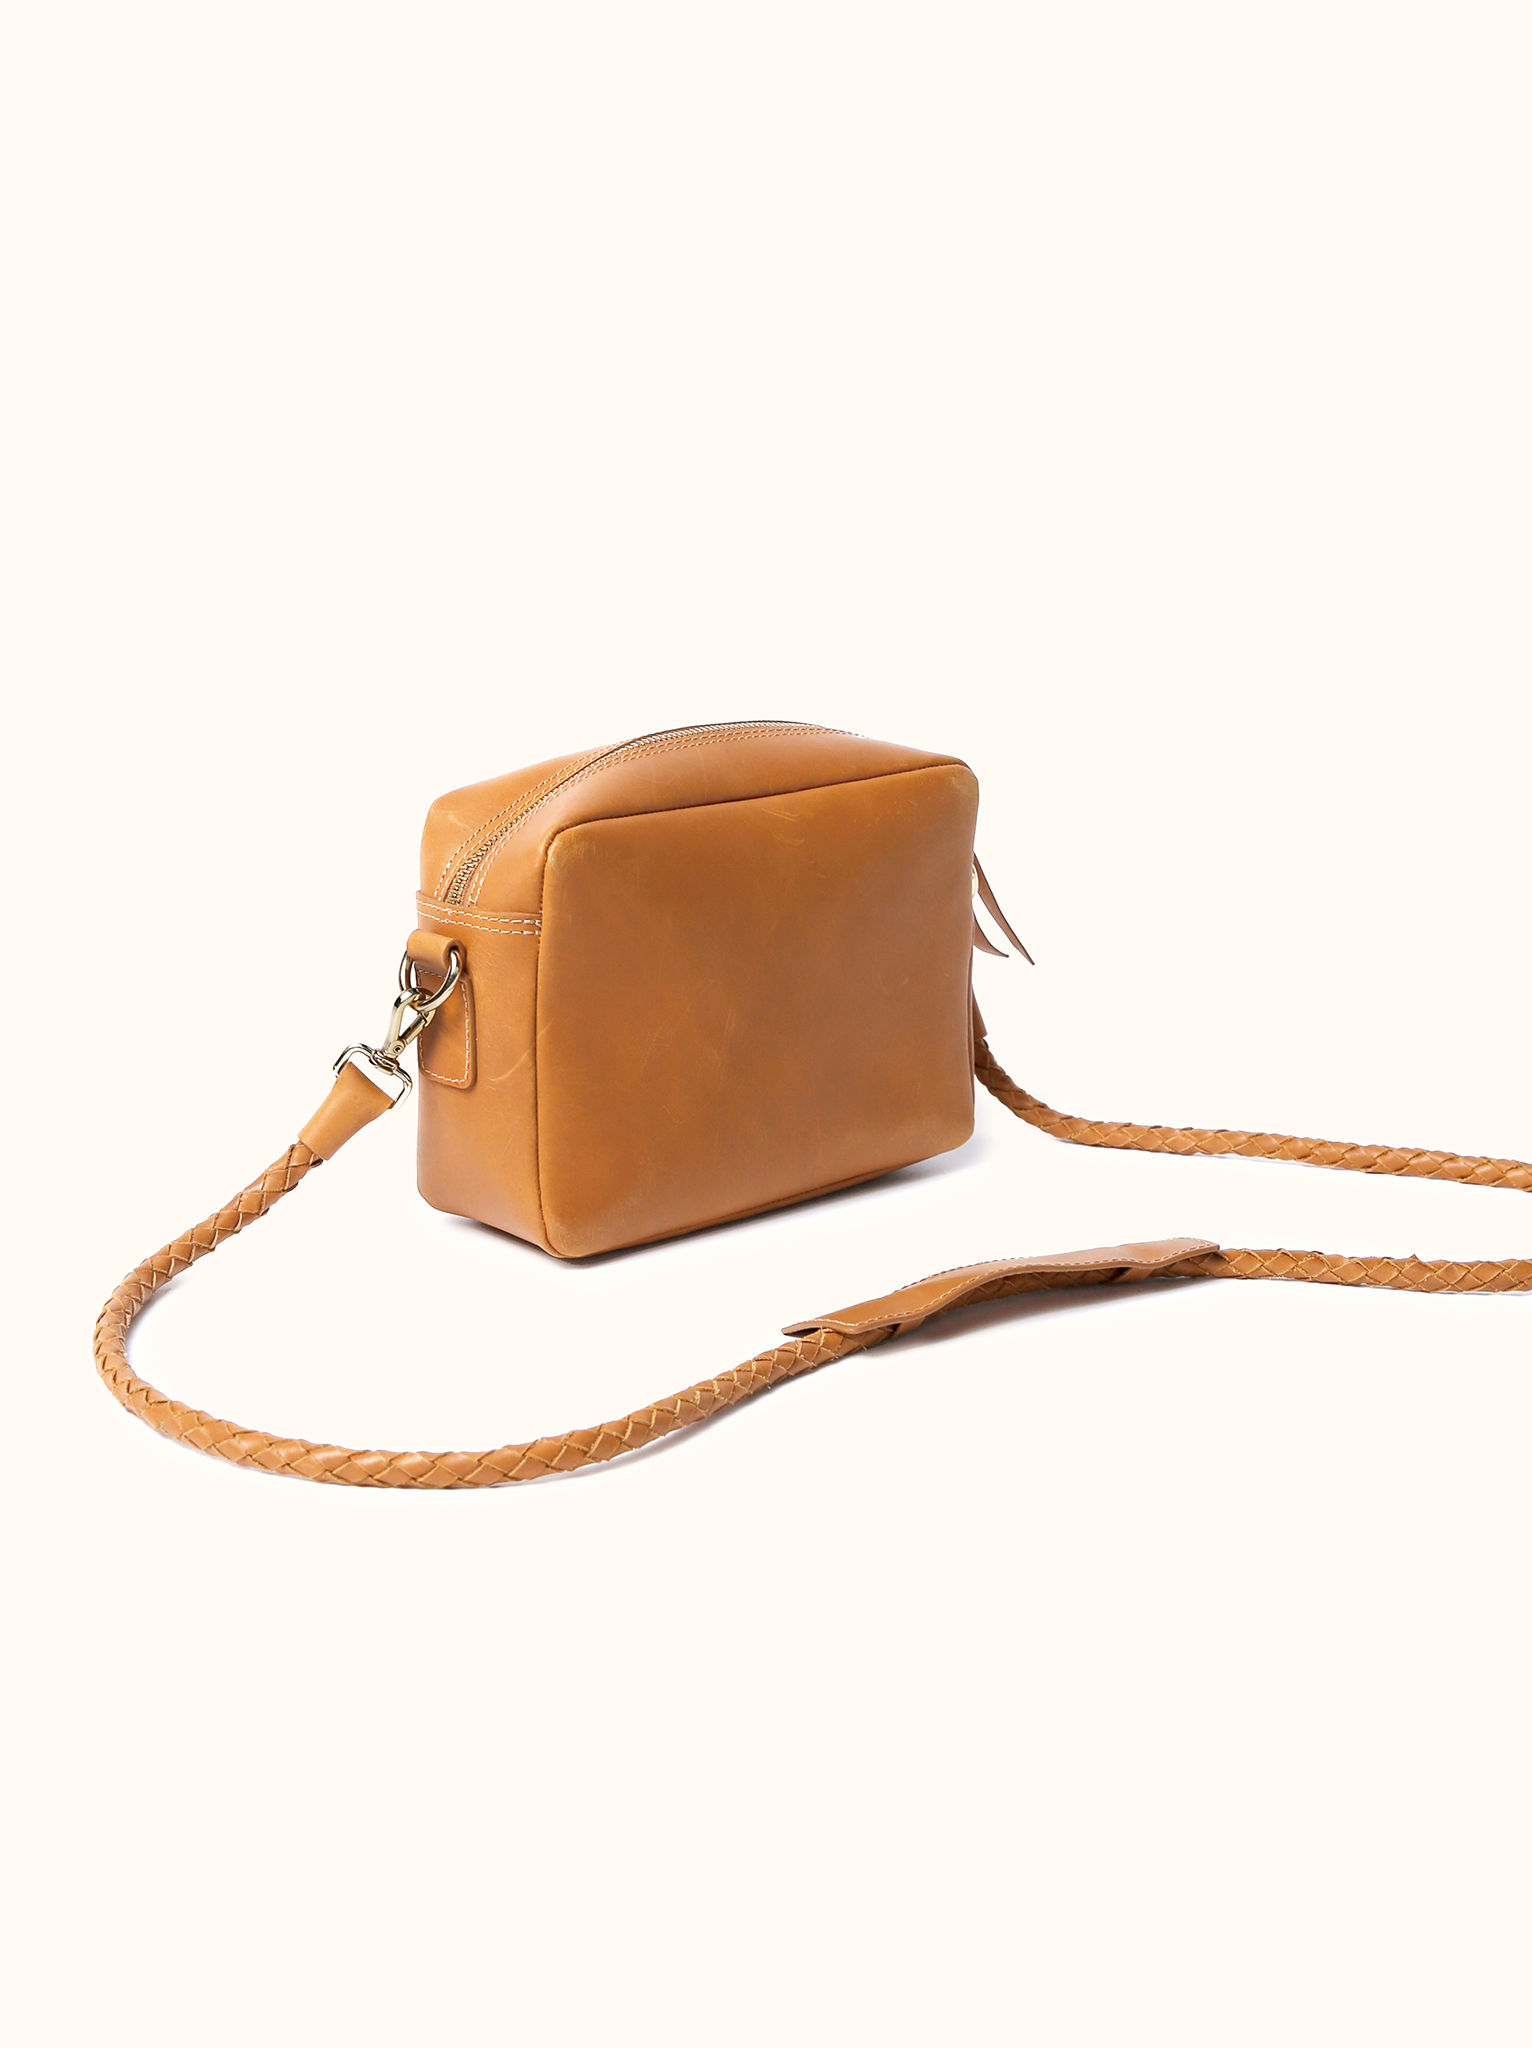 ASOS DESIGN cross-body bag with woven top handle and detachable